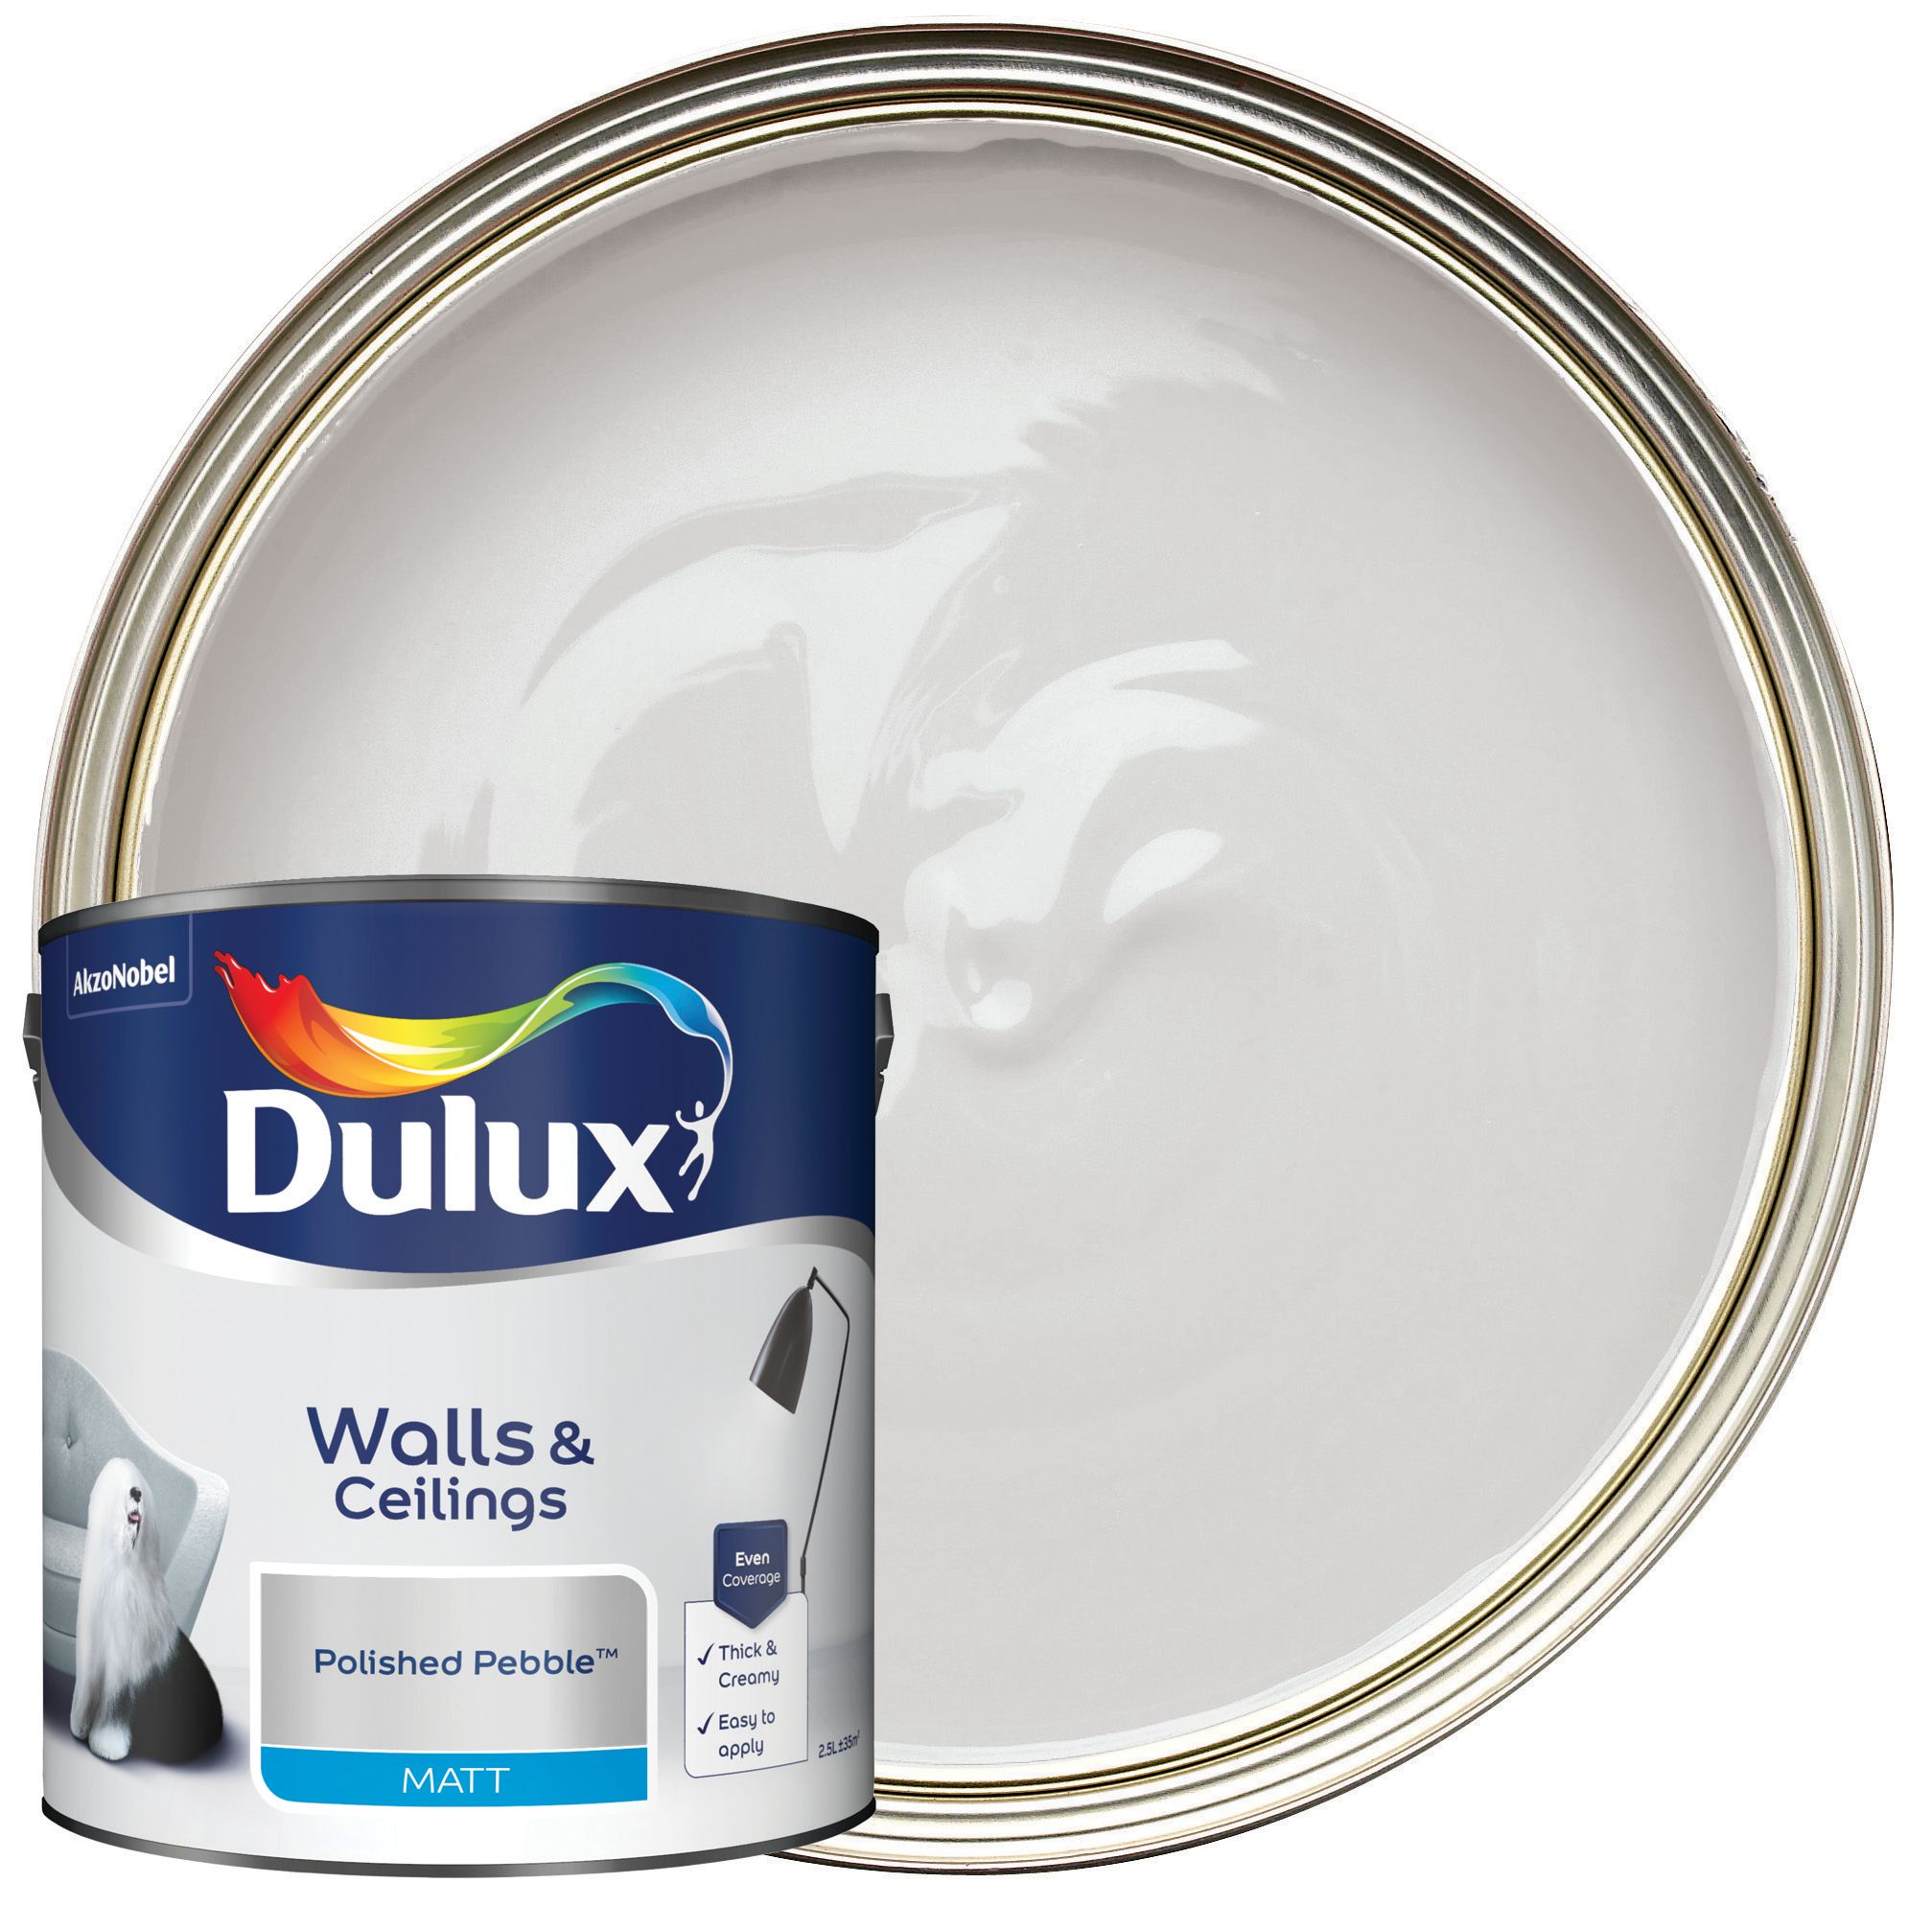 Dulux Matt Emulsion Paint - Polished Pebble - 2.5L